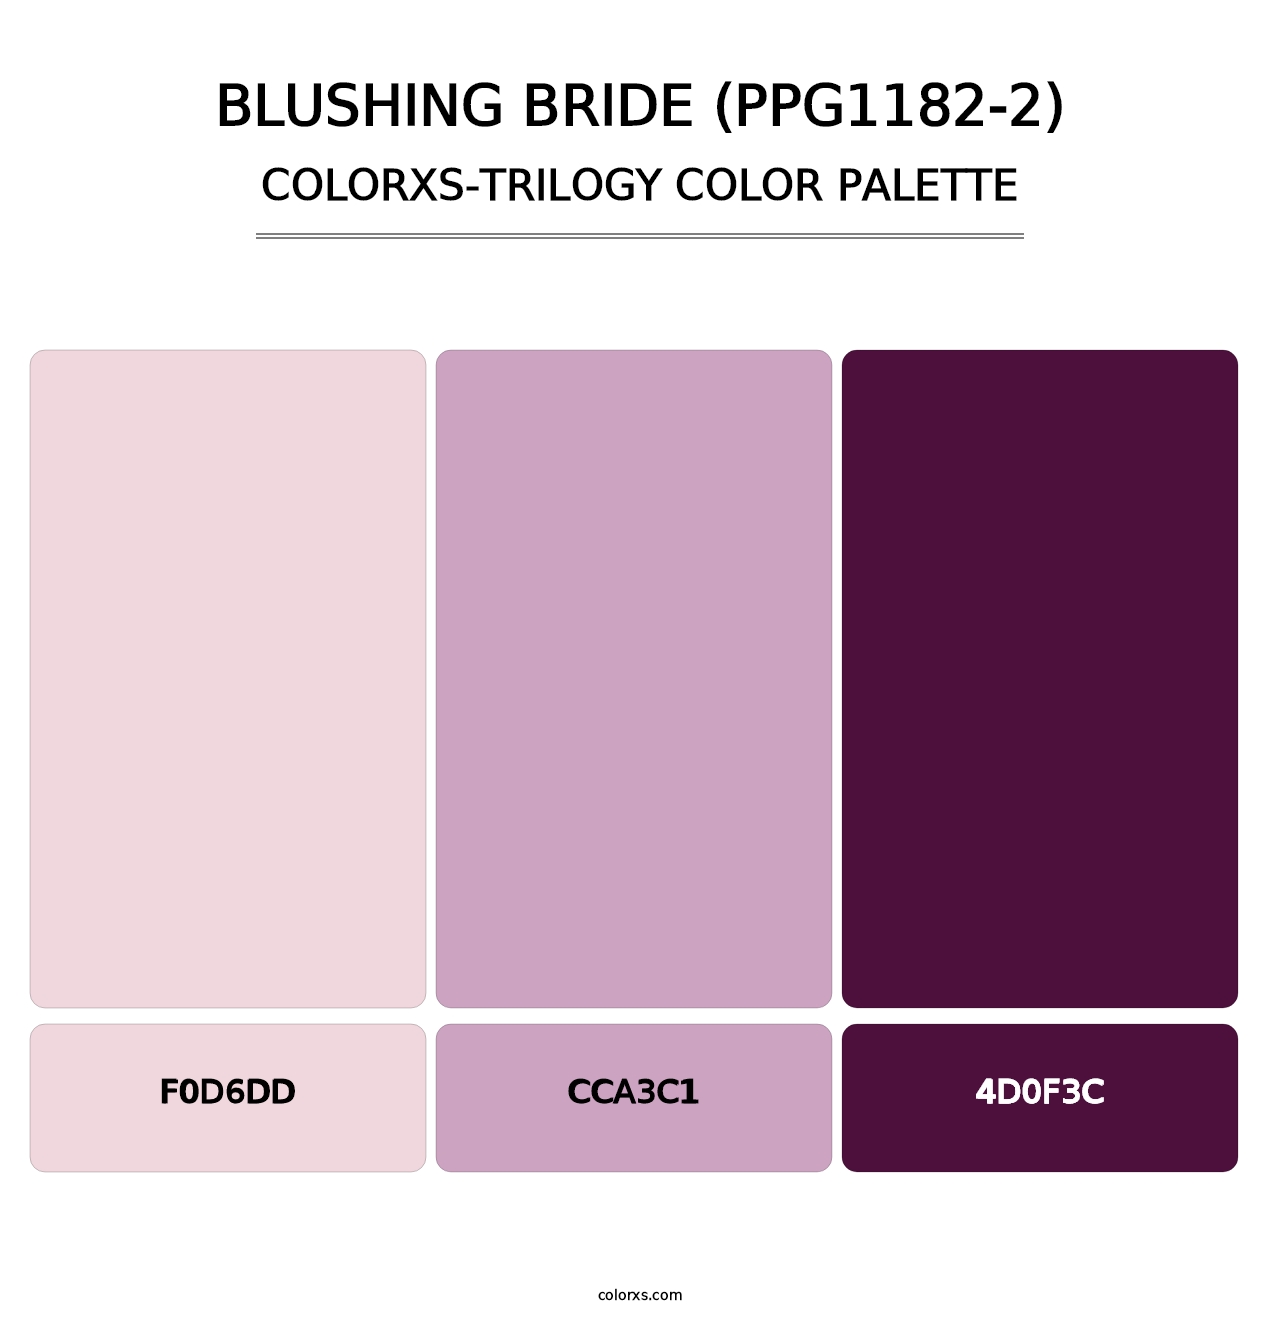 Blushing Bride (PPG1182-2) - Colorxs Trilogy Palette